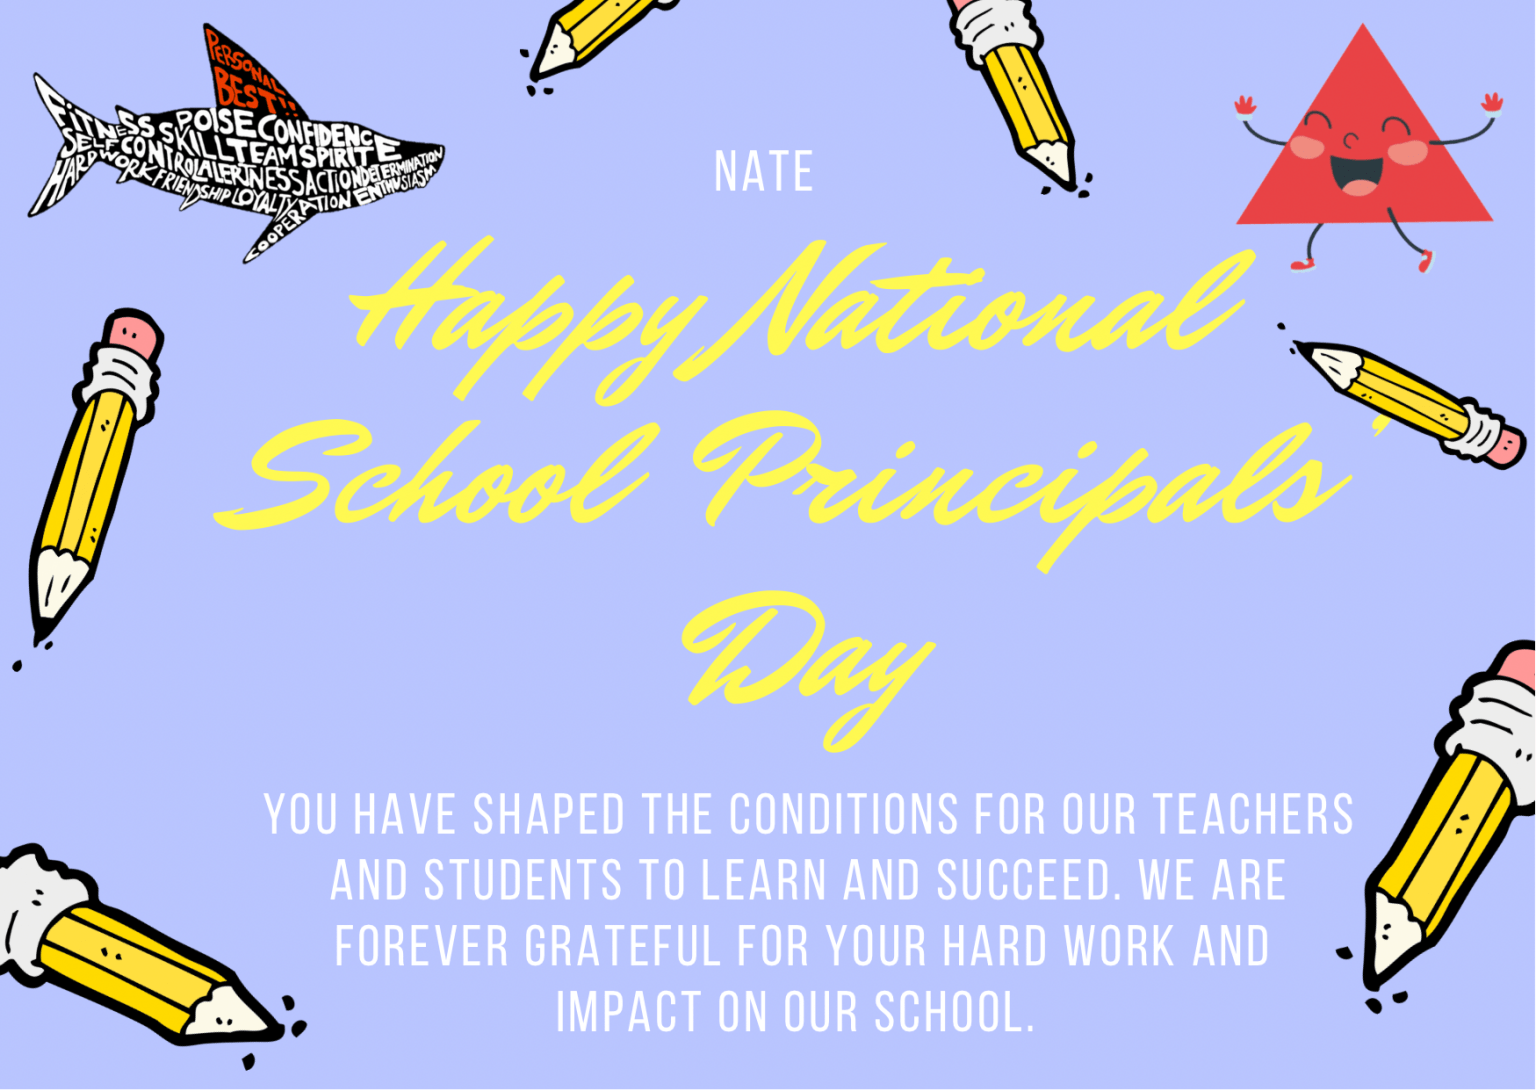 Happy National School Principals’ Day! The Soko Blog